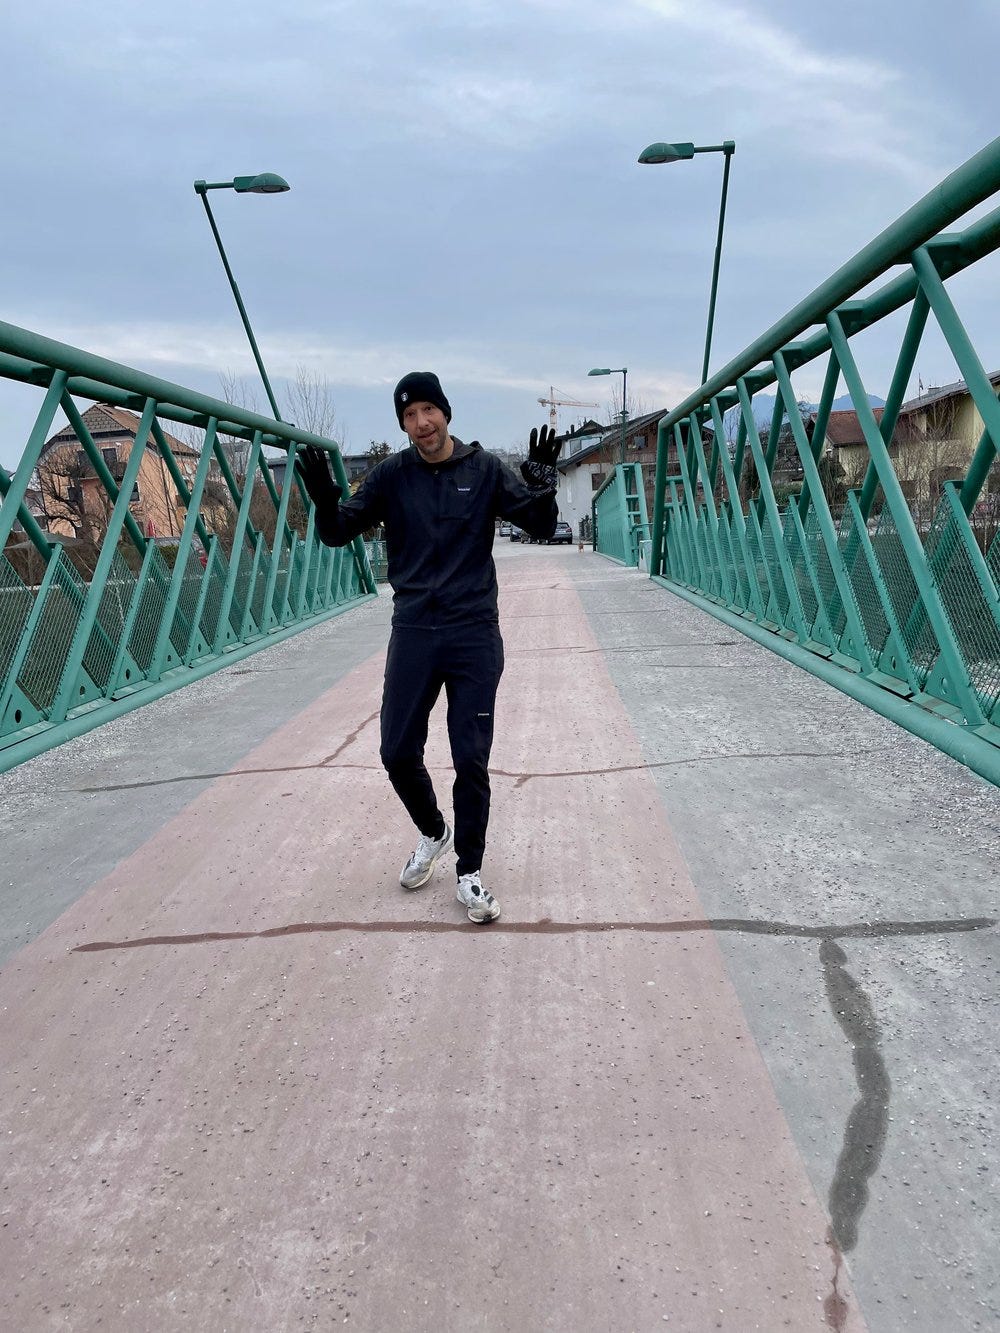 Runner on a Bridge